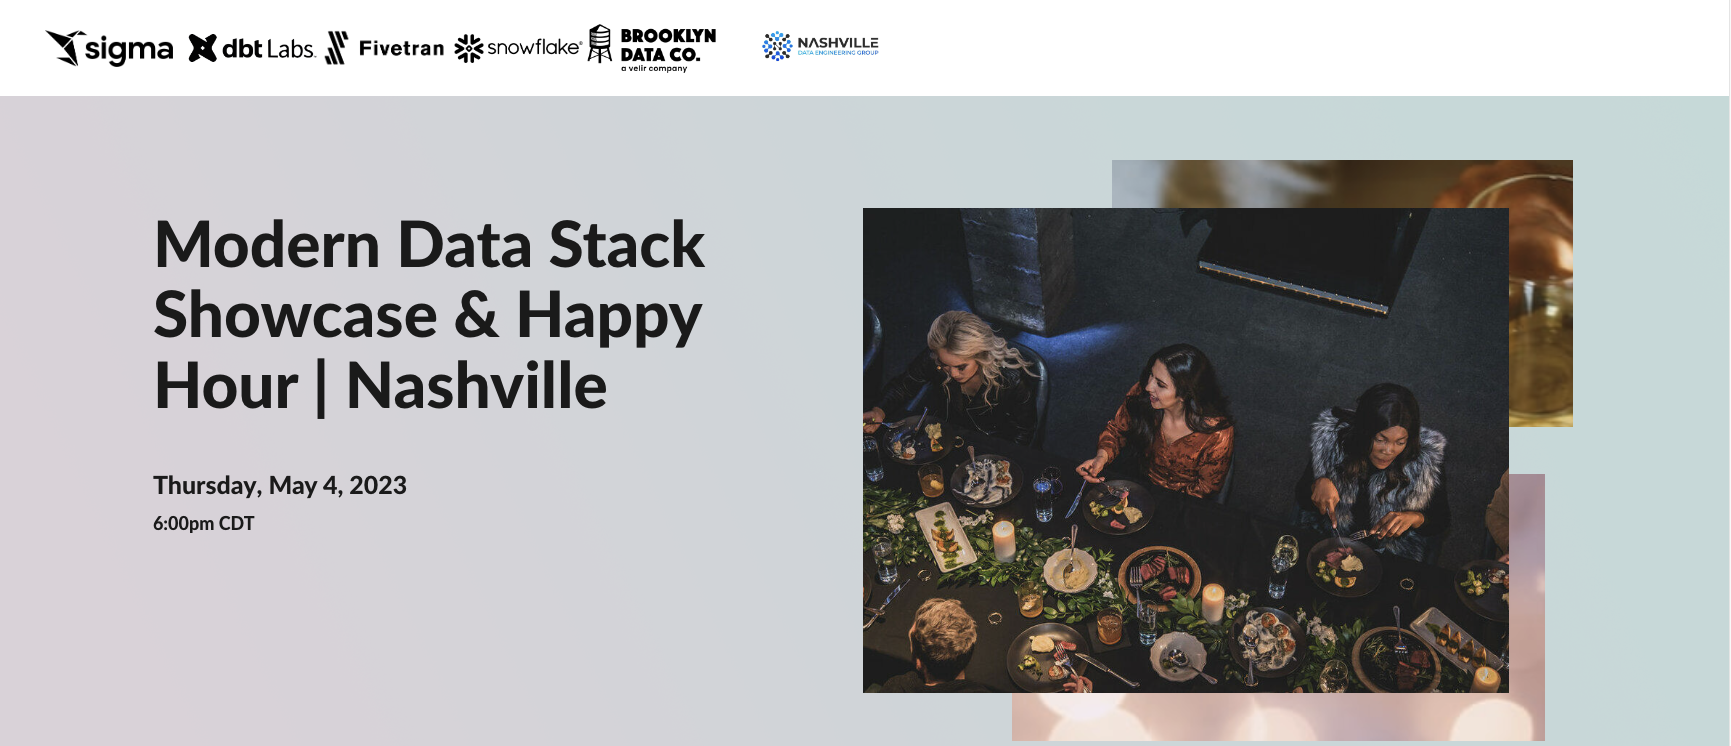 Modern Data Stack Showcase & Happy Hour - Nashville